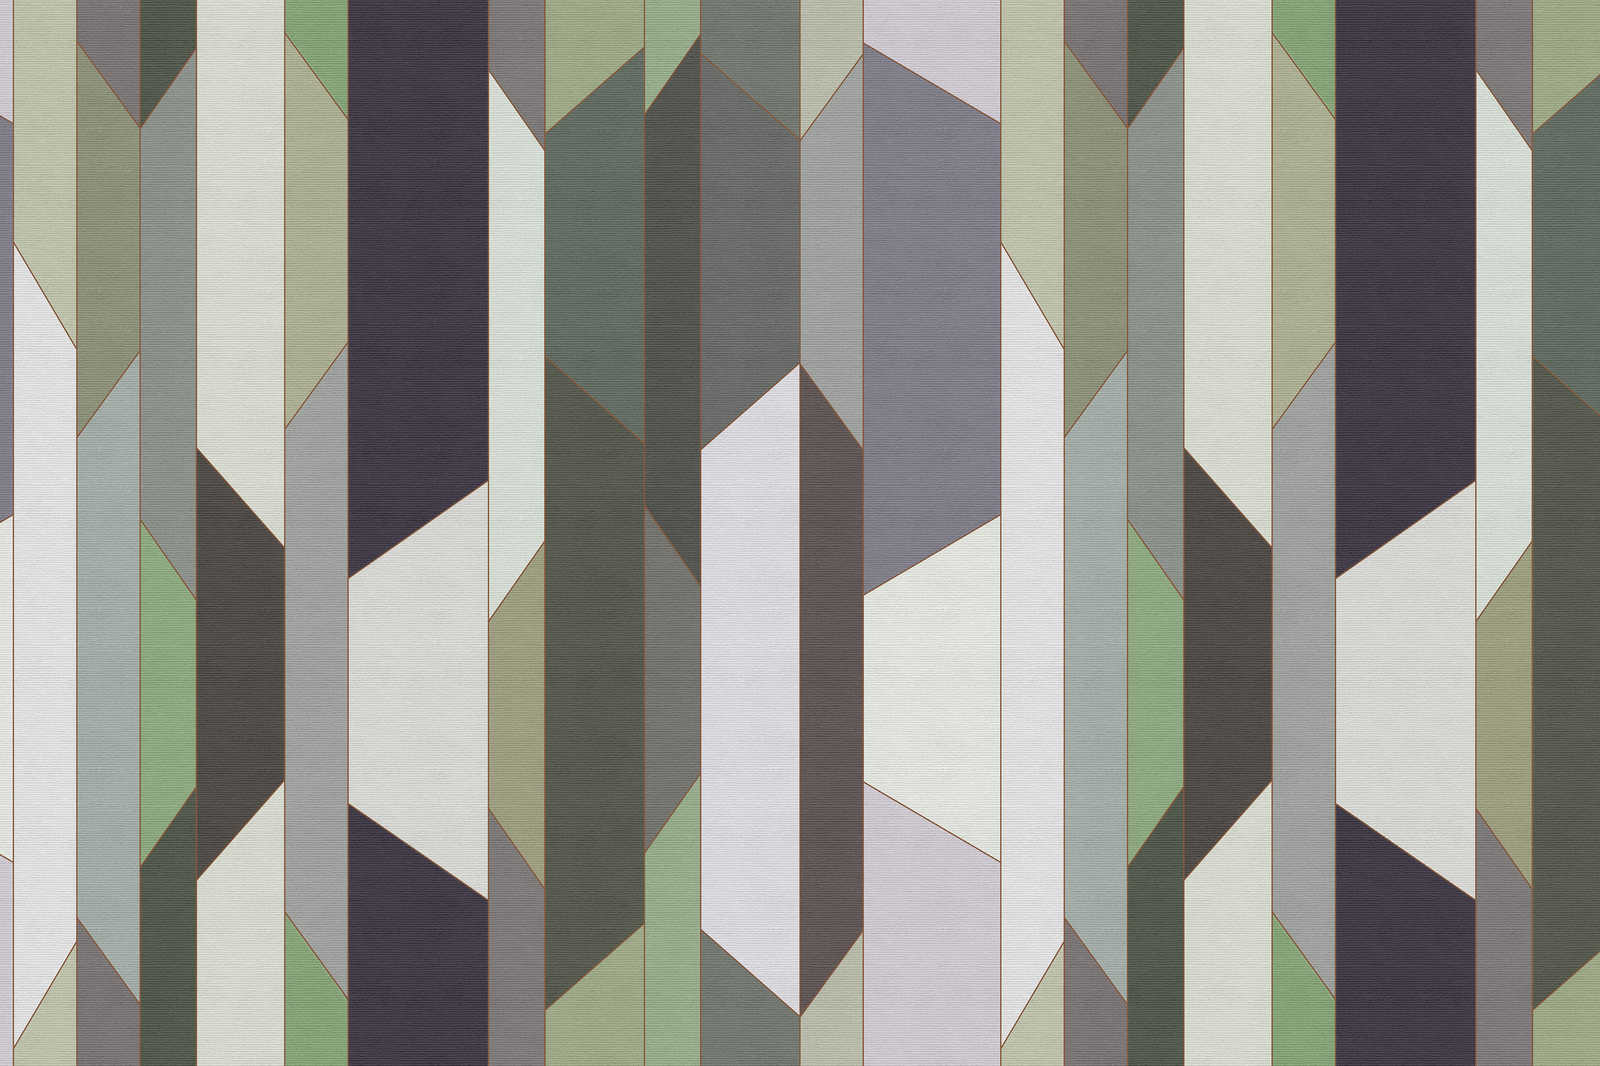             Fold 1 - Leinwandbild mit Streifendesign im Retro Stil – 1,20 m x 0,80 m
        